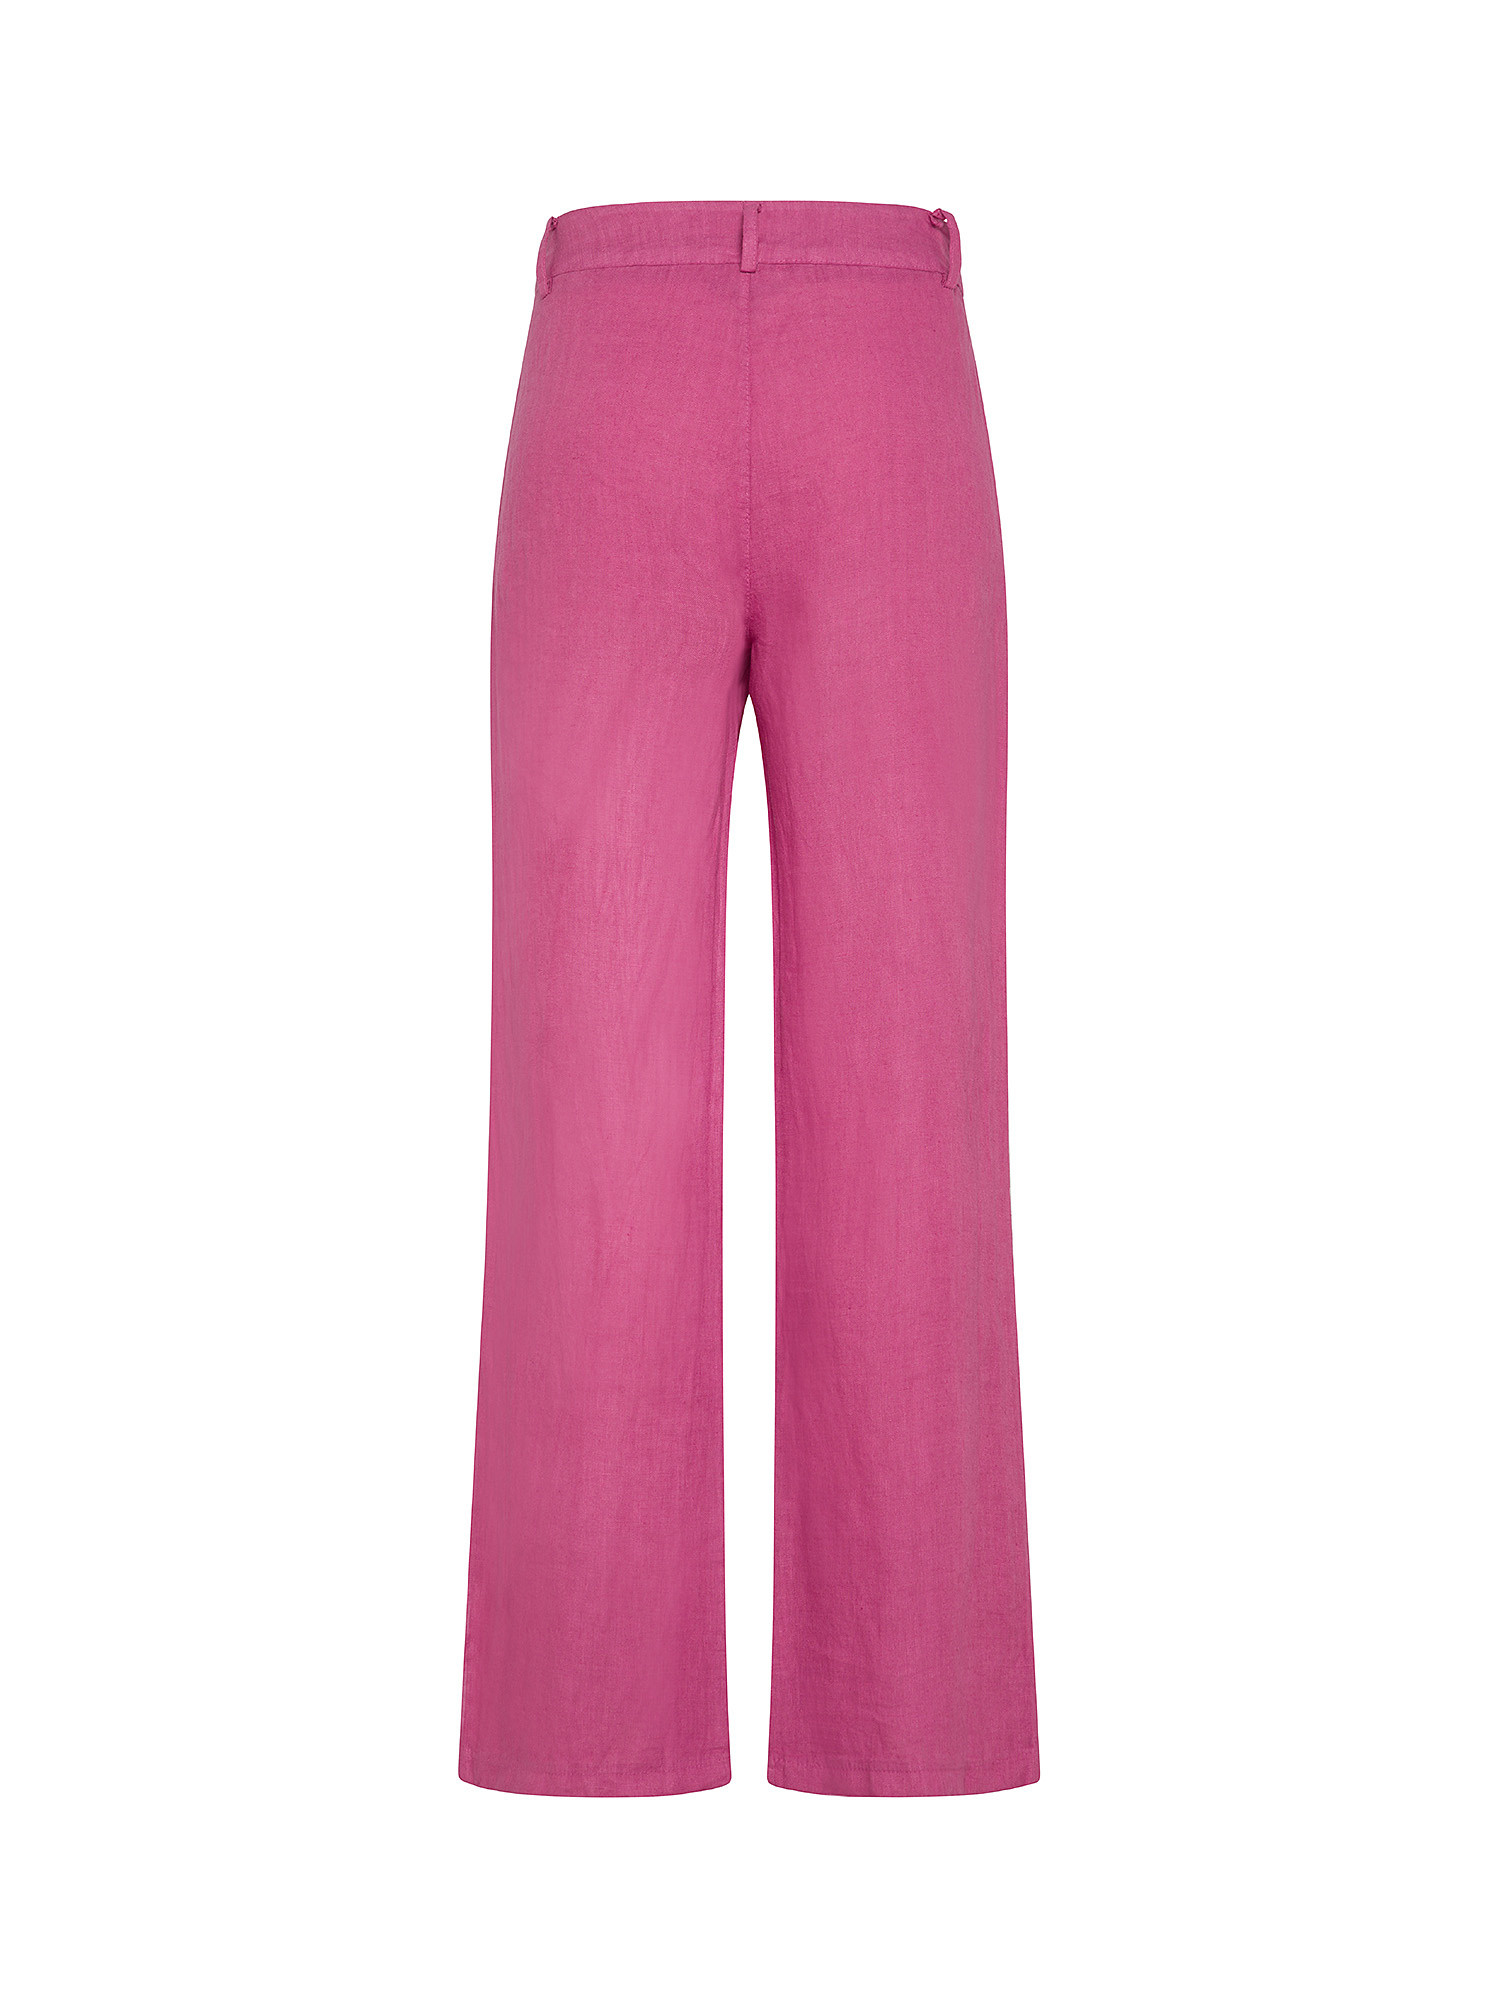 Koan - Pantaloni in lino con pinces, Rosa, large image number 1